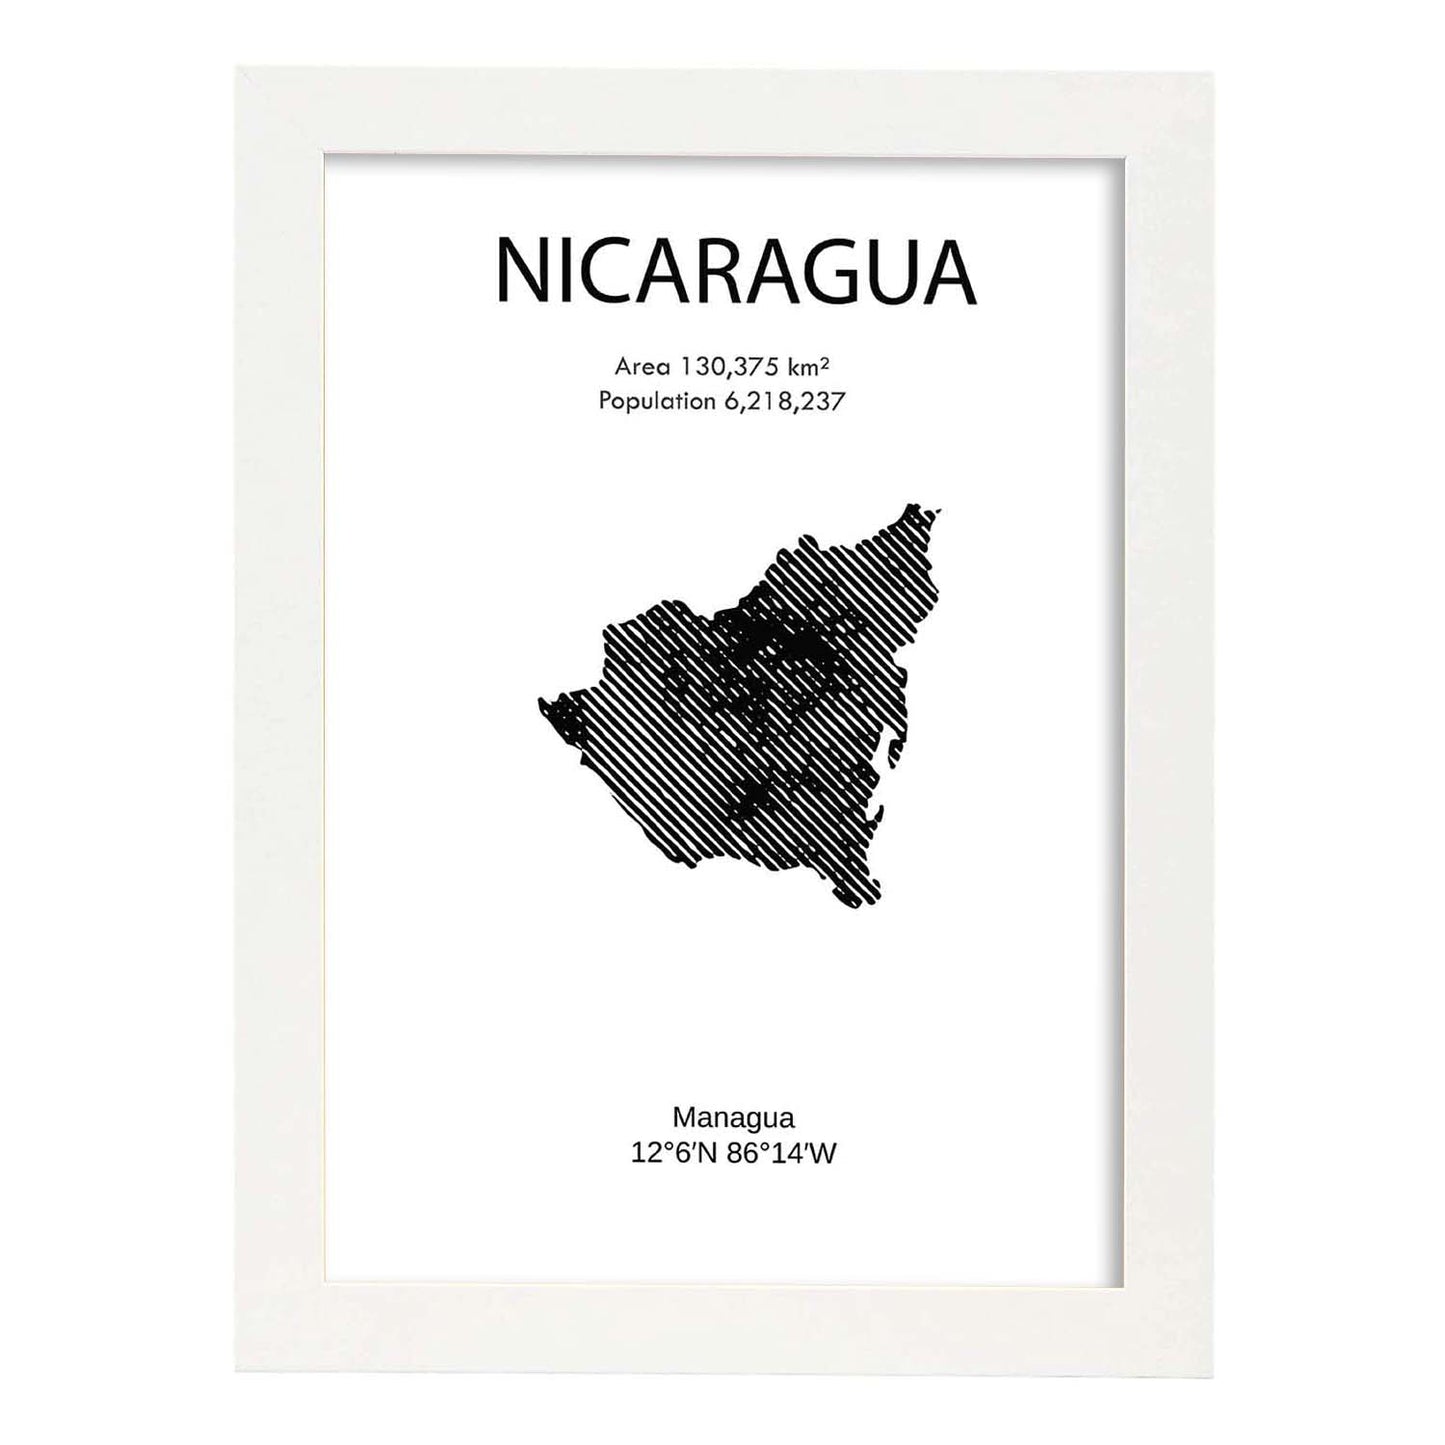 Poster de Nicaragua. Láminas de paises y continentes del mundo.-Artwork-Nacnic-A4-Marco Blanco-Nacnic Estudio SL